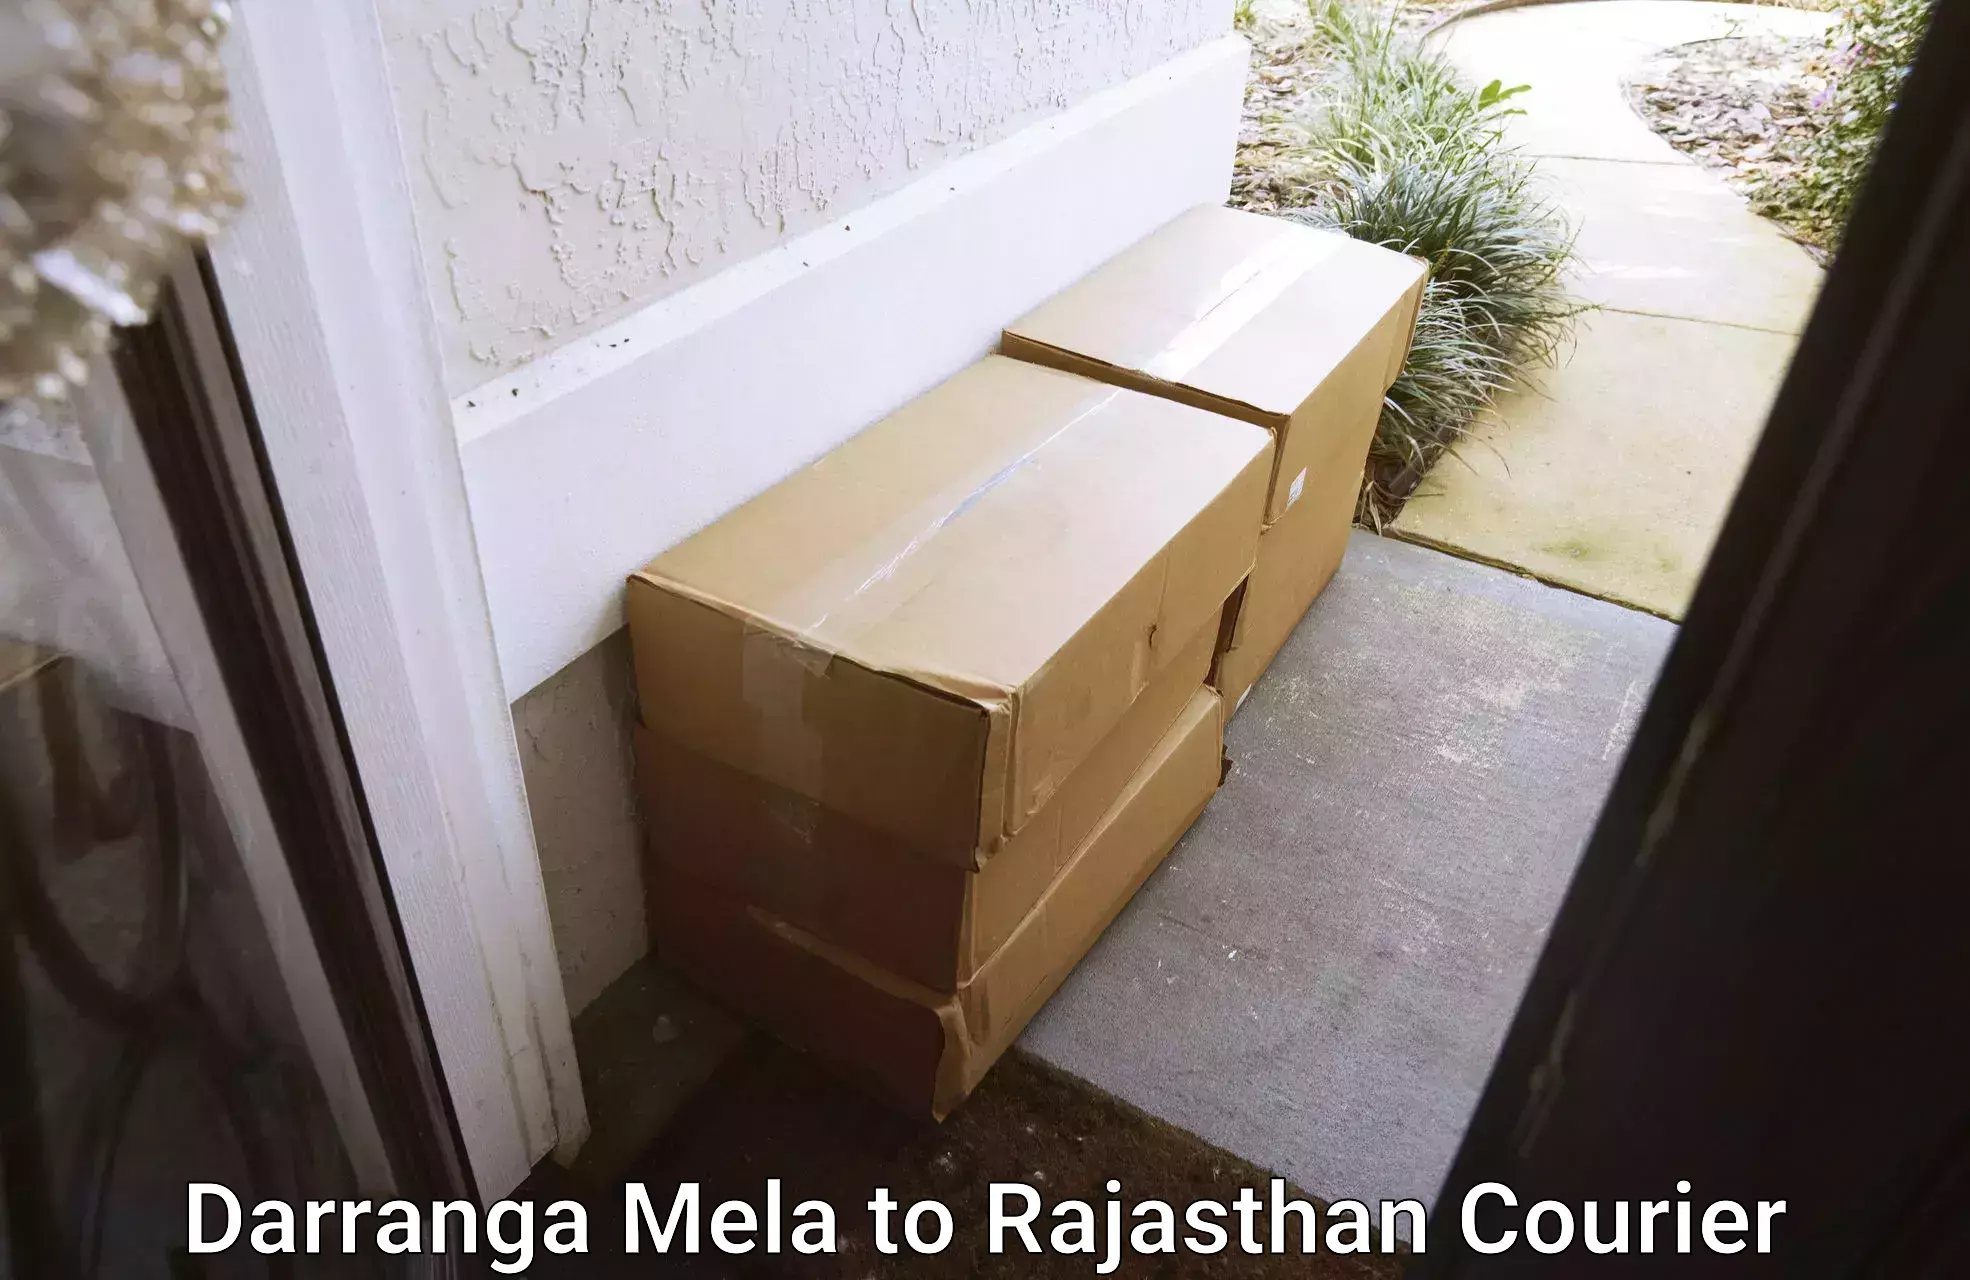 Next day courier Darranga Mela to Sojat